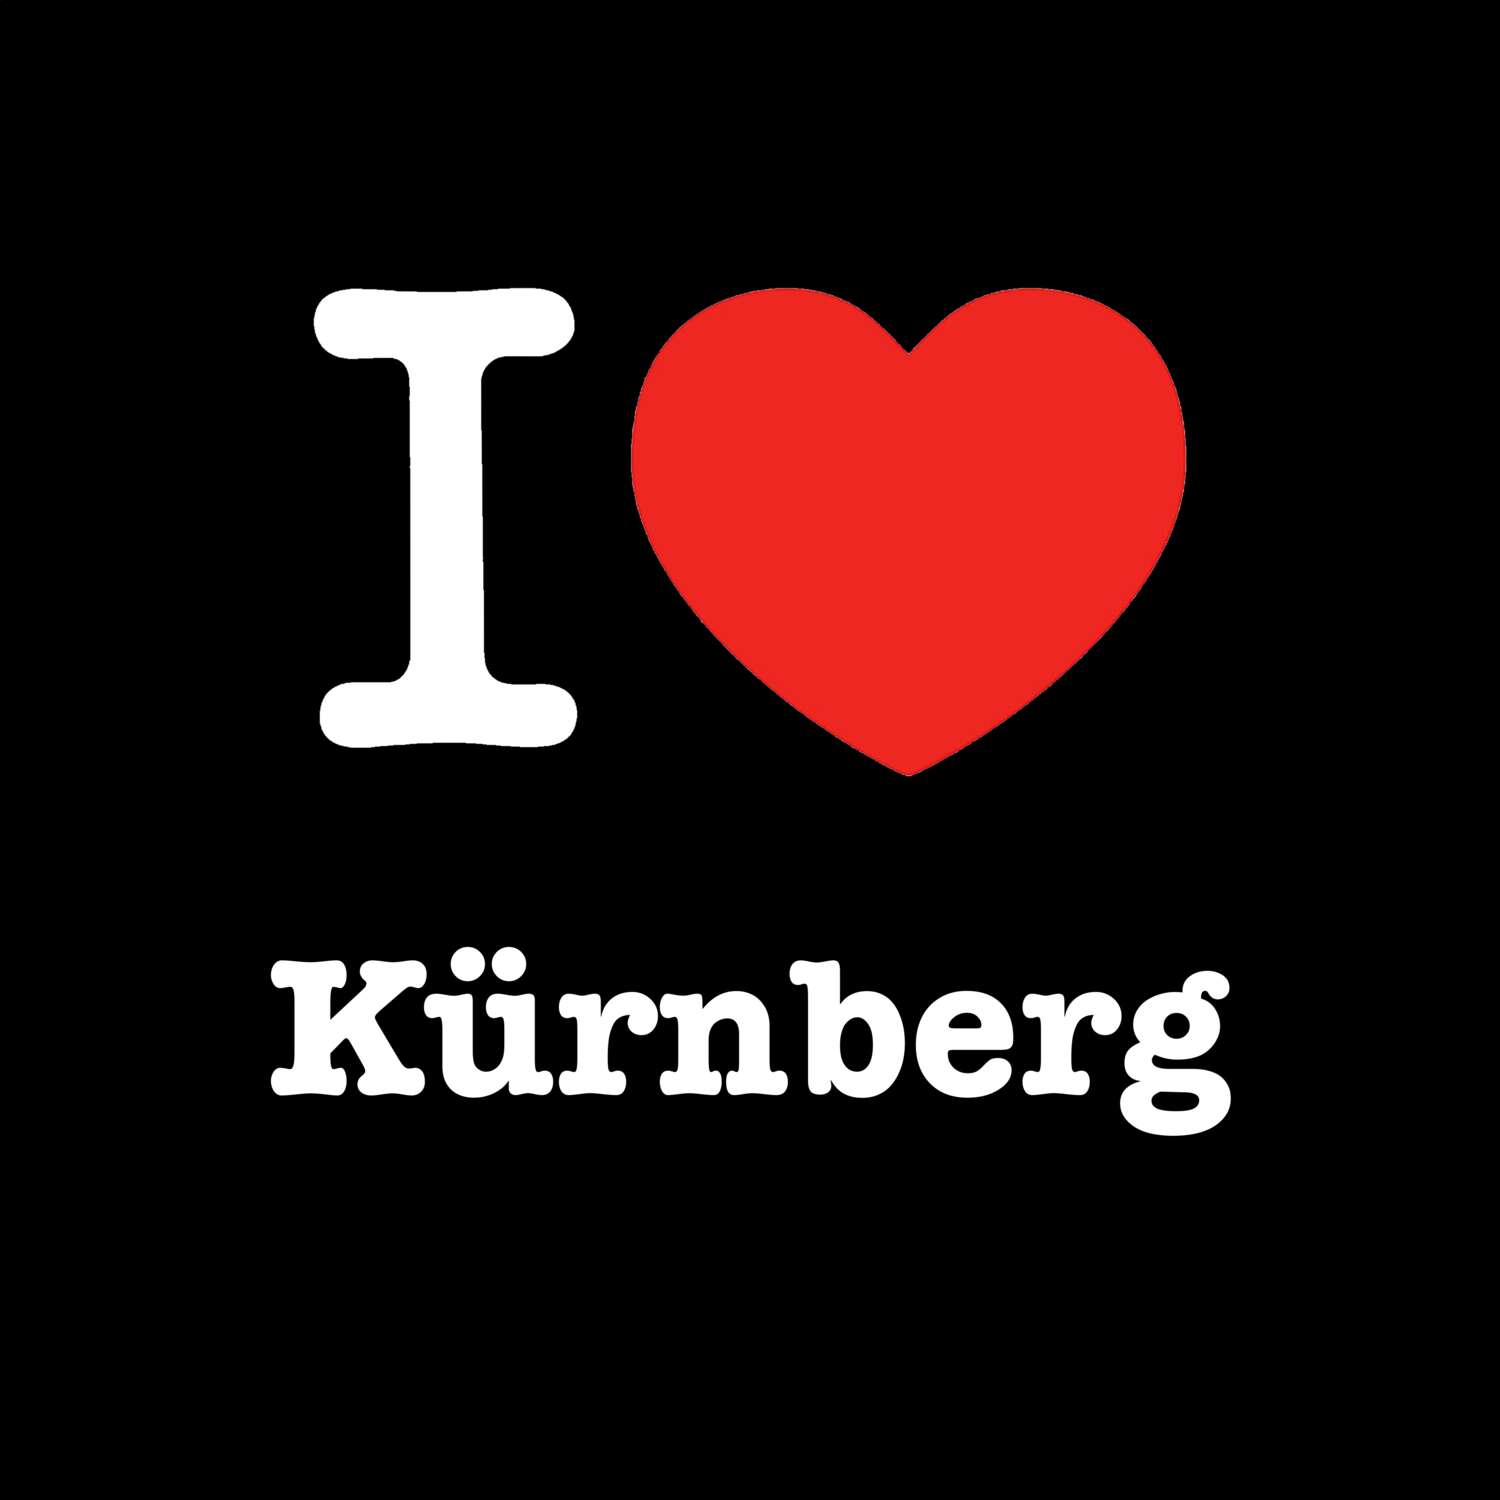 Kürnberg T-Shirt »I love«